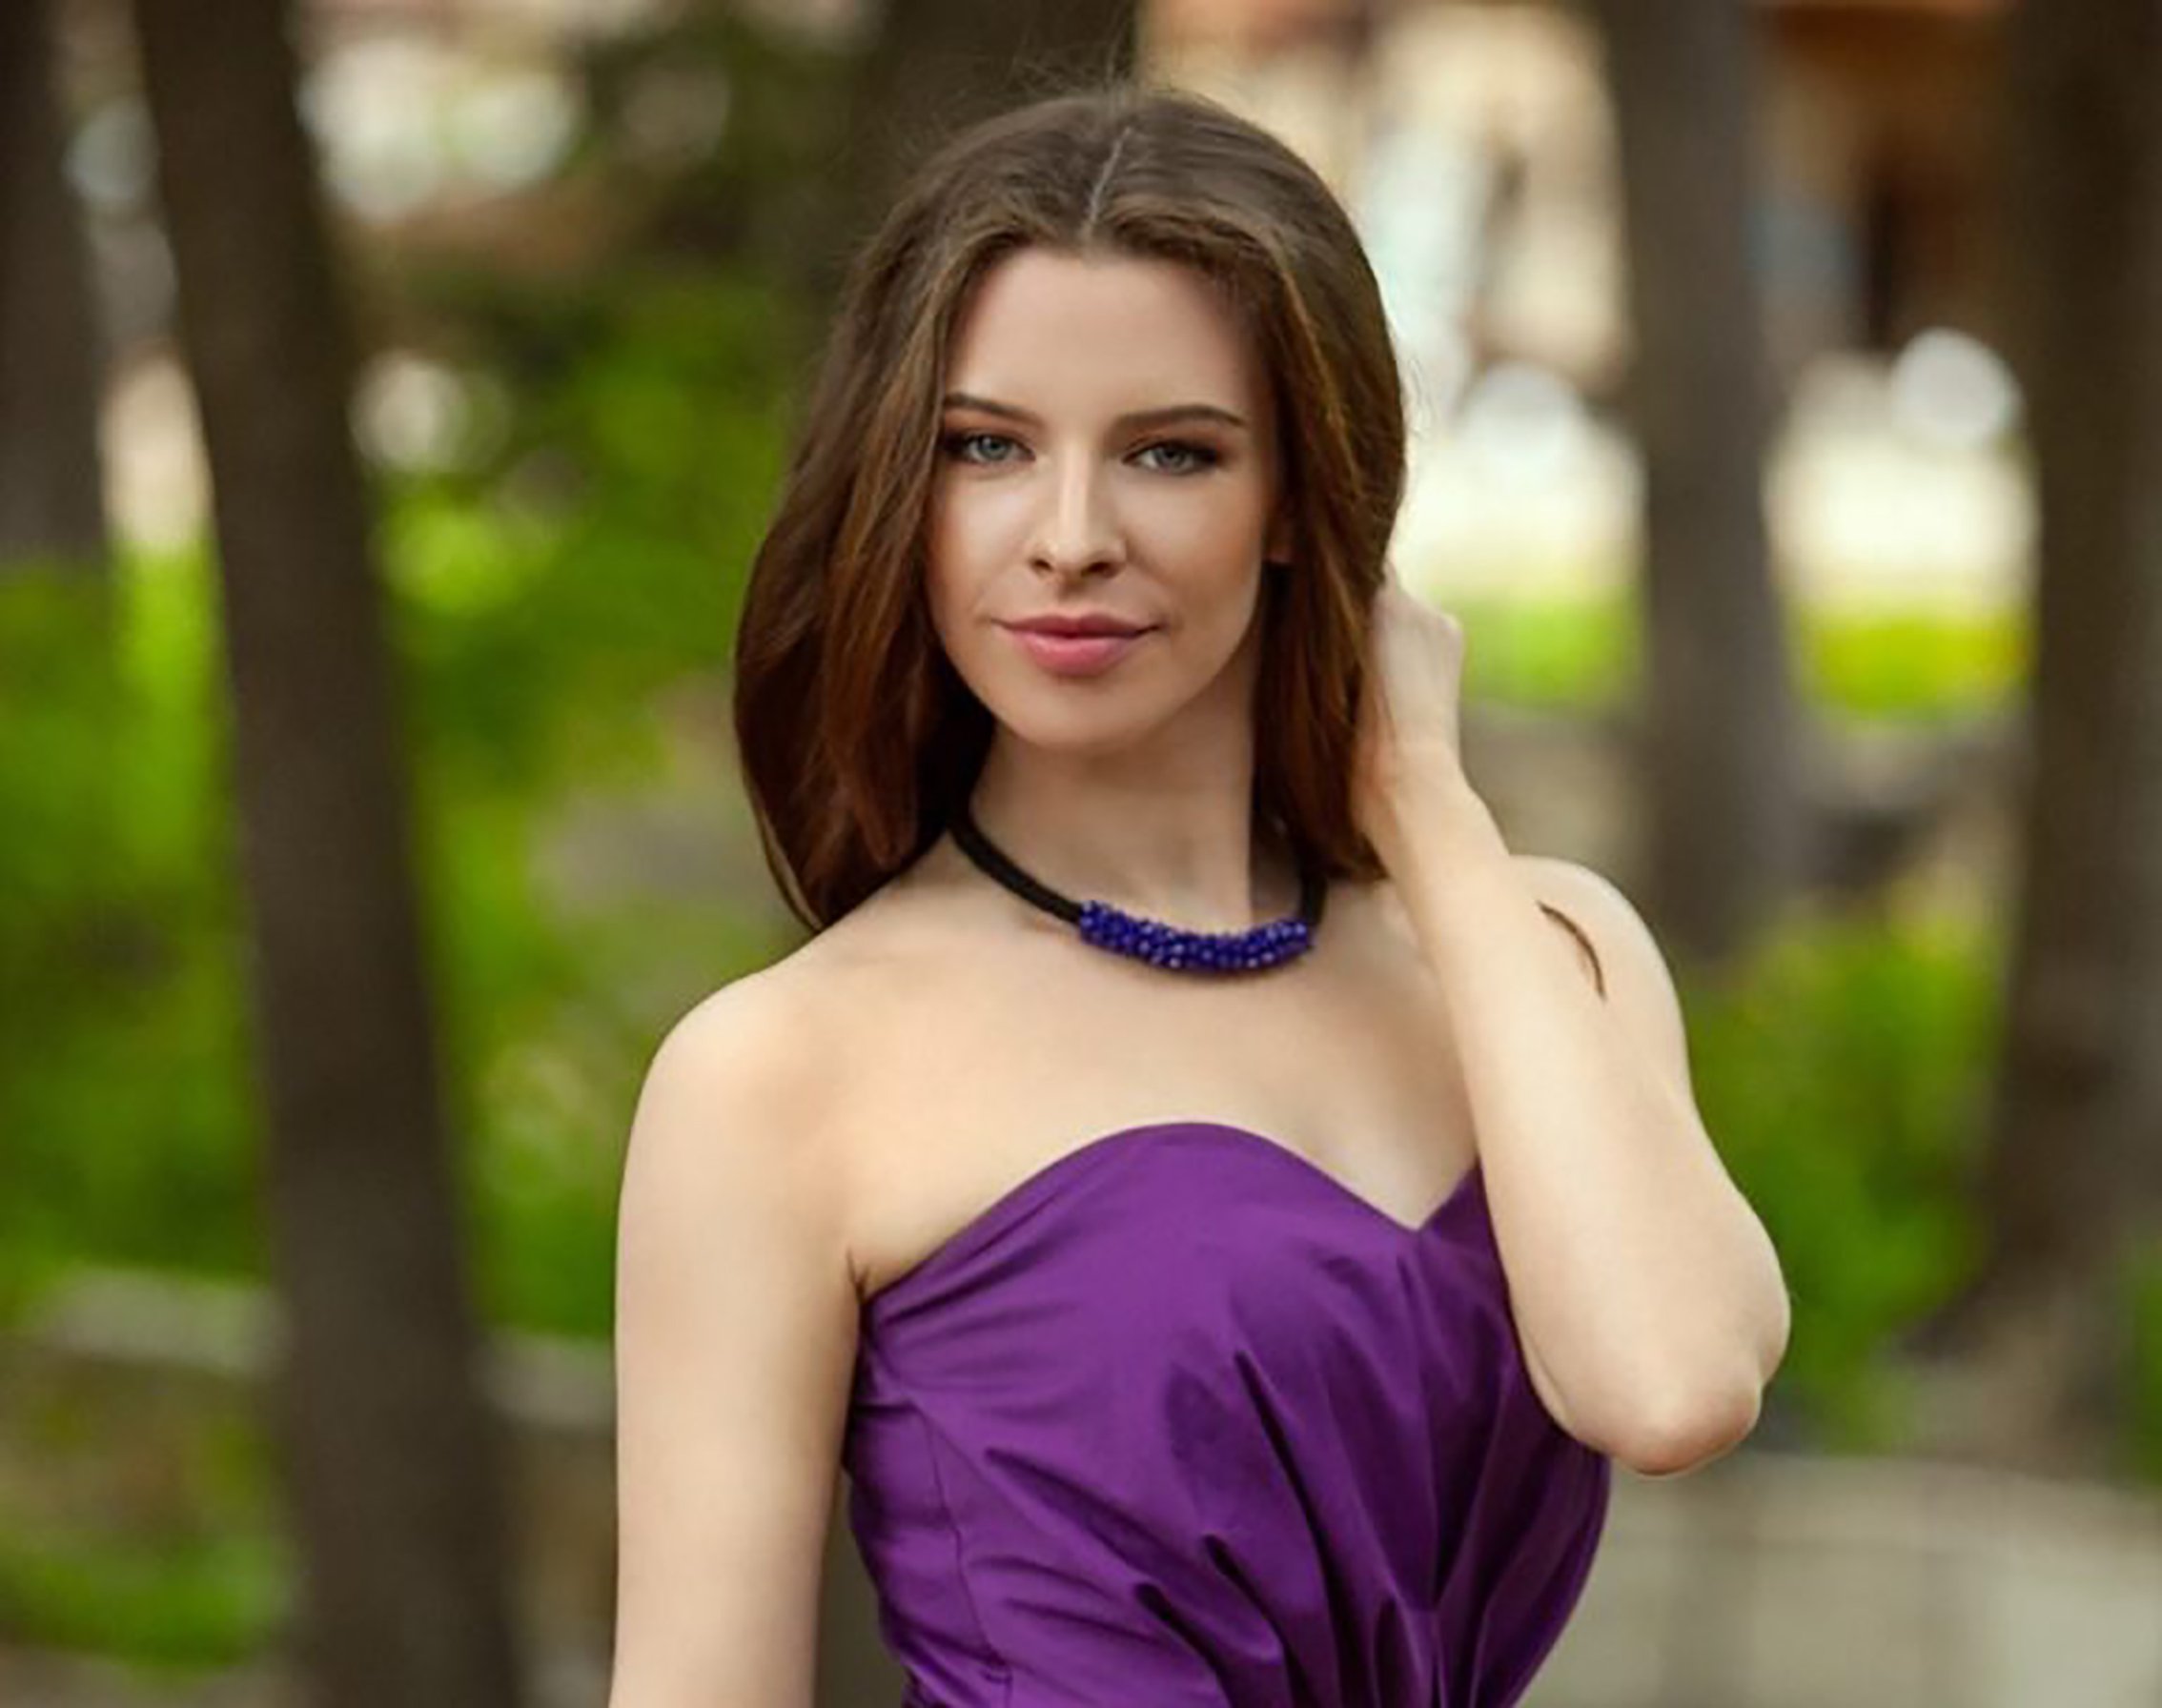 Молодые девушки украины. Красивые девушки Украины. Украинские девушки самые красивые. Украинки самые красивые девушки. Самые красивые девушки хохлушки.